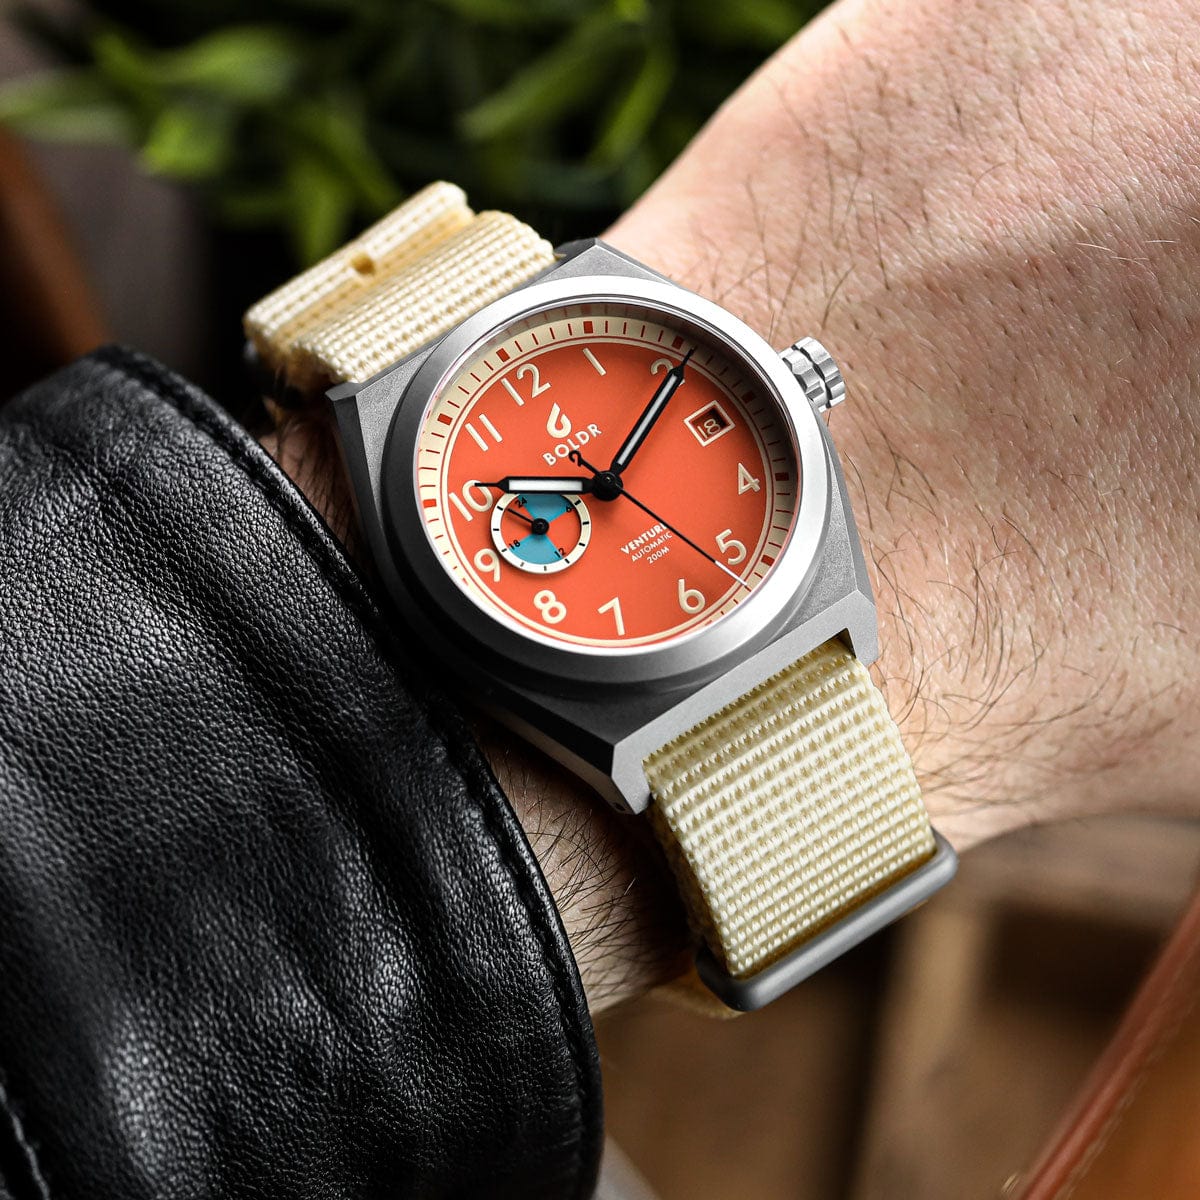 Boldr Venture Wayfarer Automatic Watch - Tangerine - NEARLY NEW